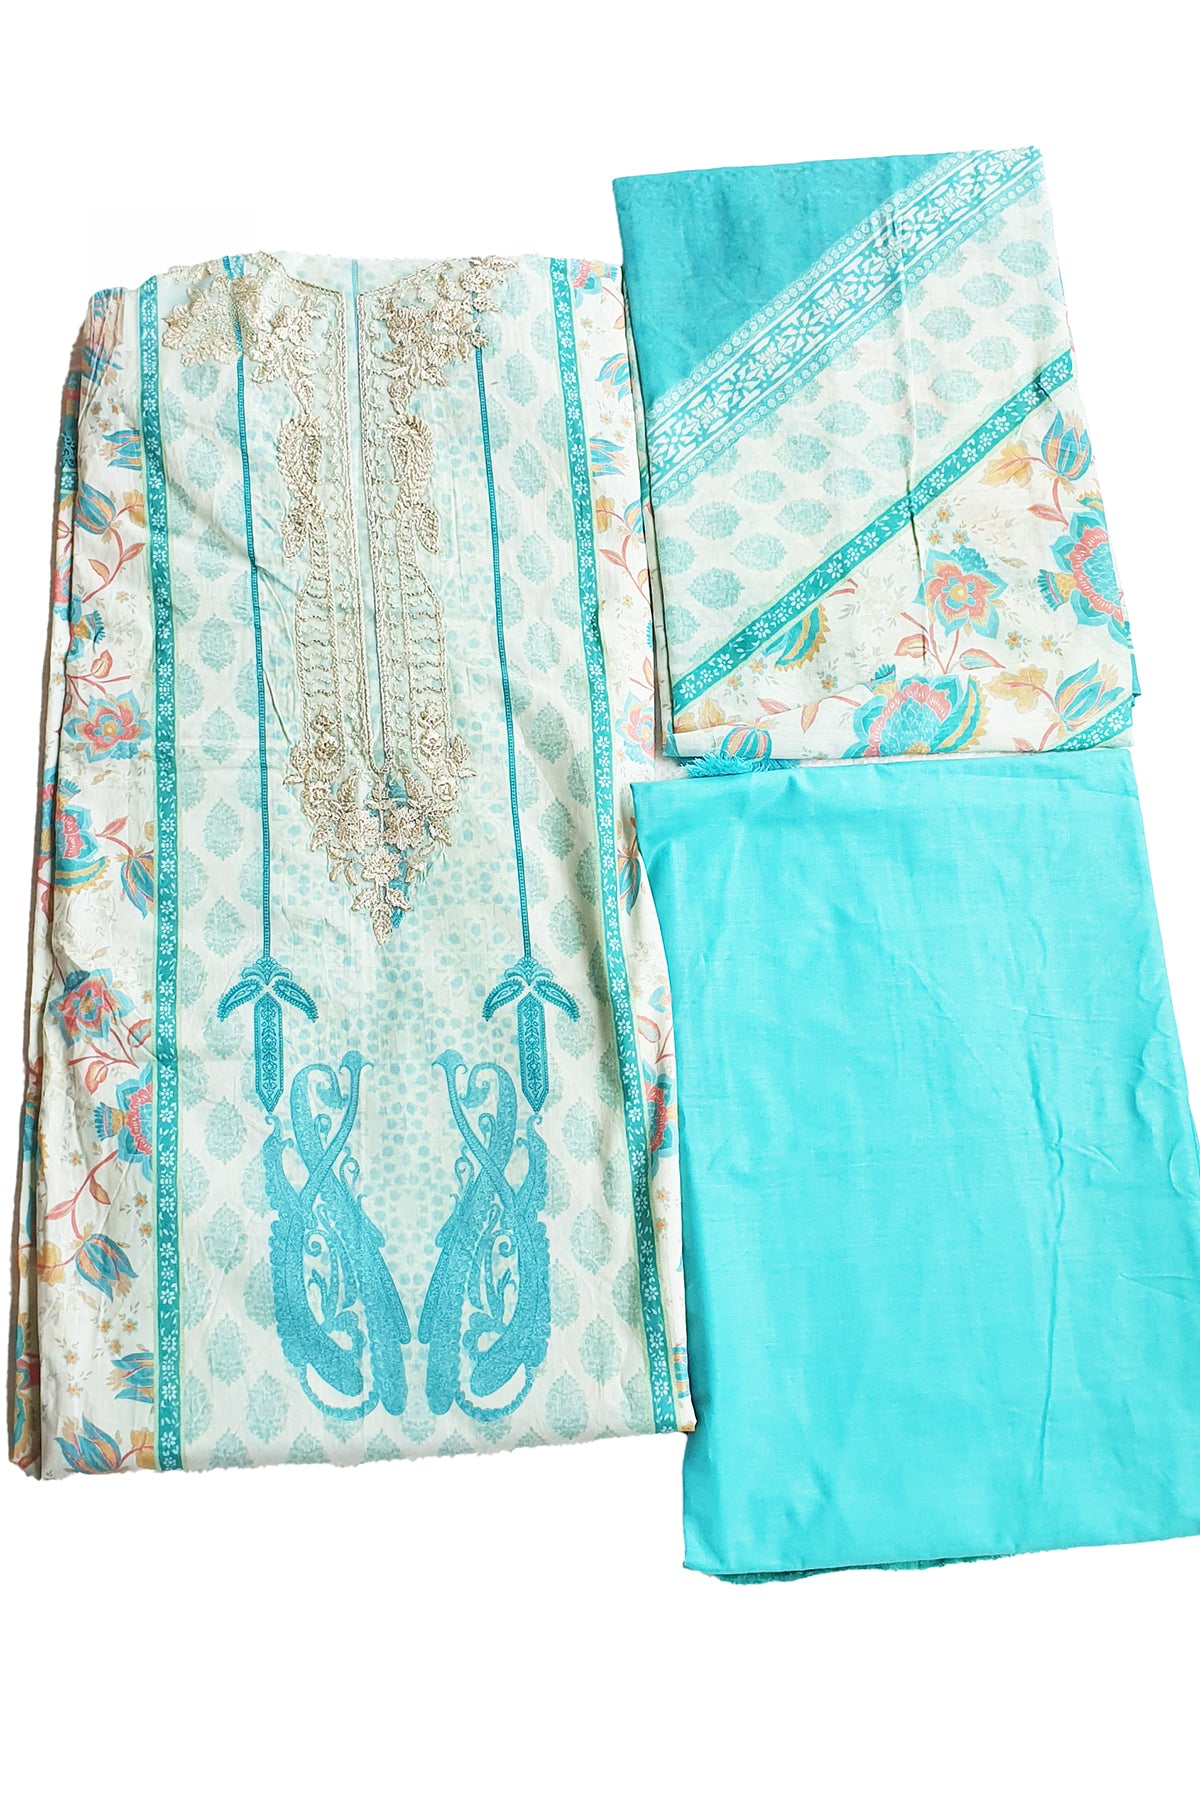 Rama Cotton Neck Zari & Thread Embroidered Printed Suit